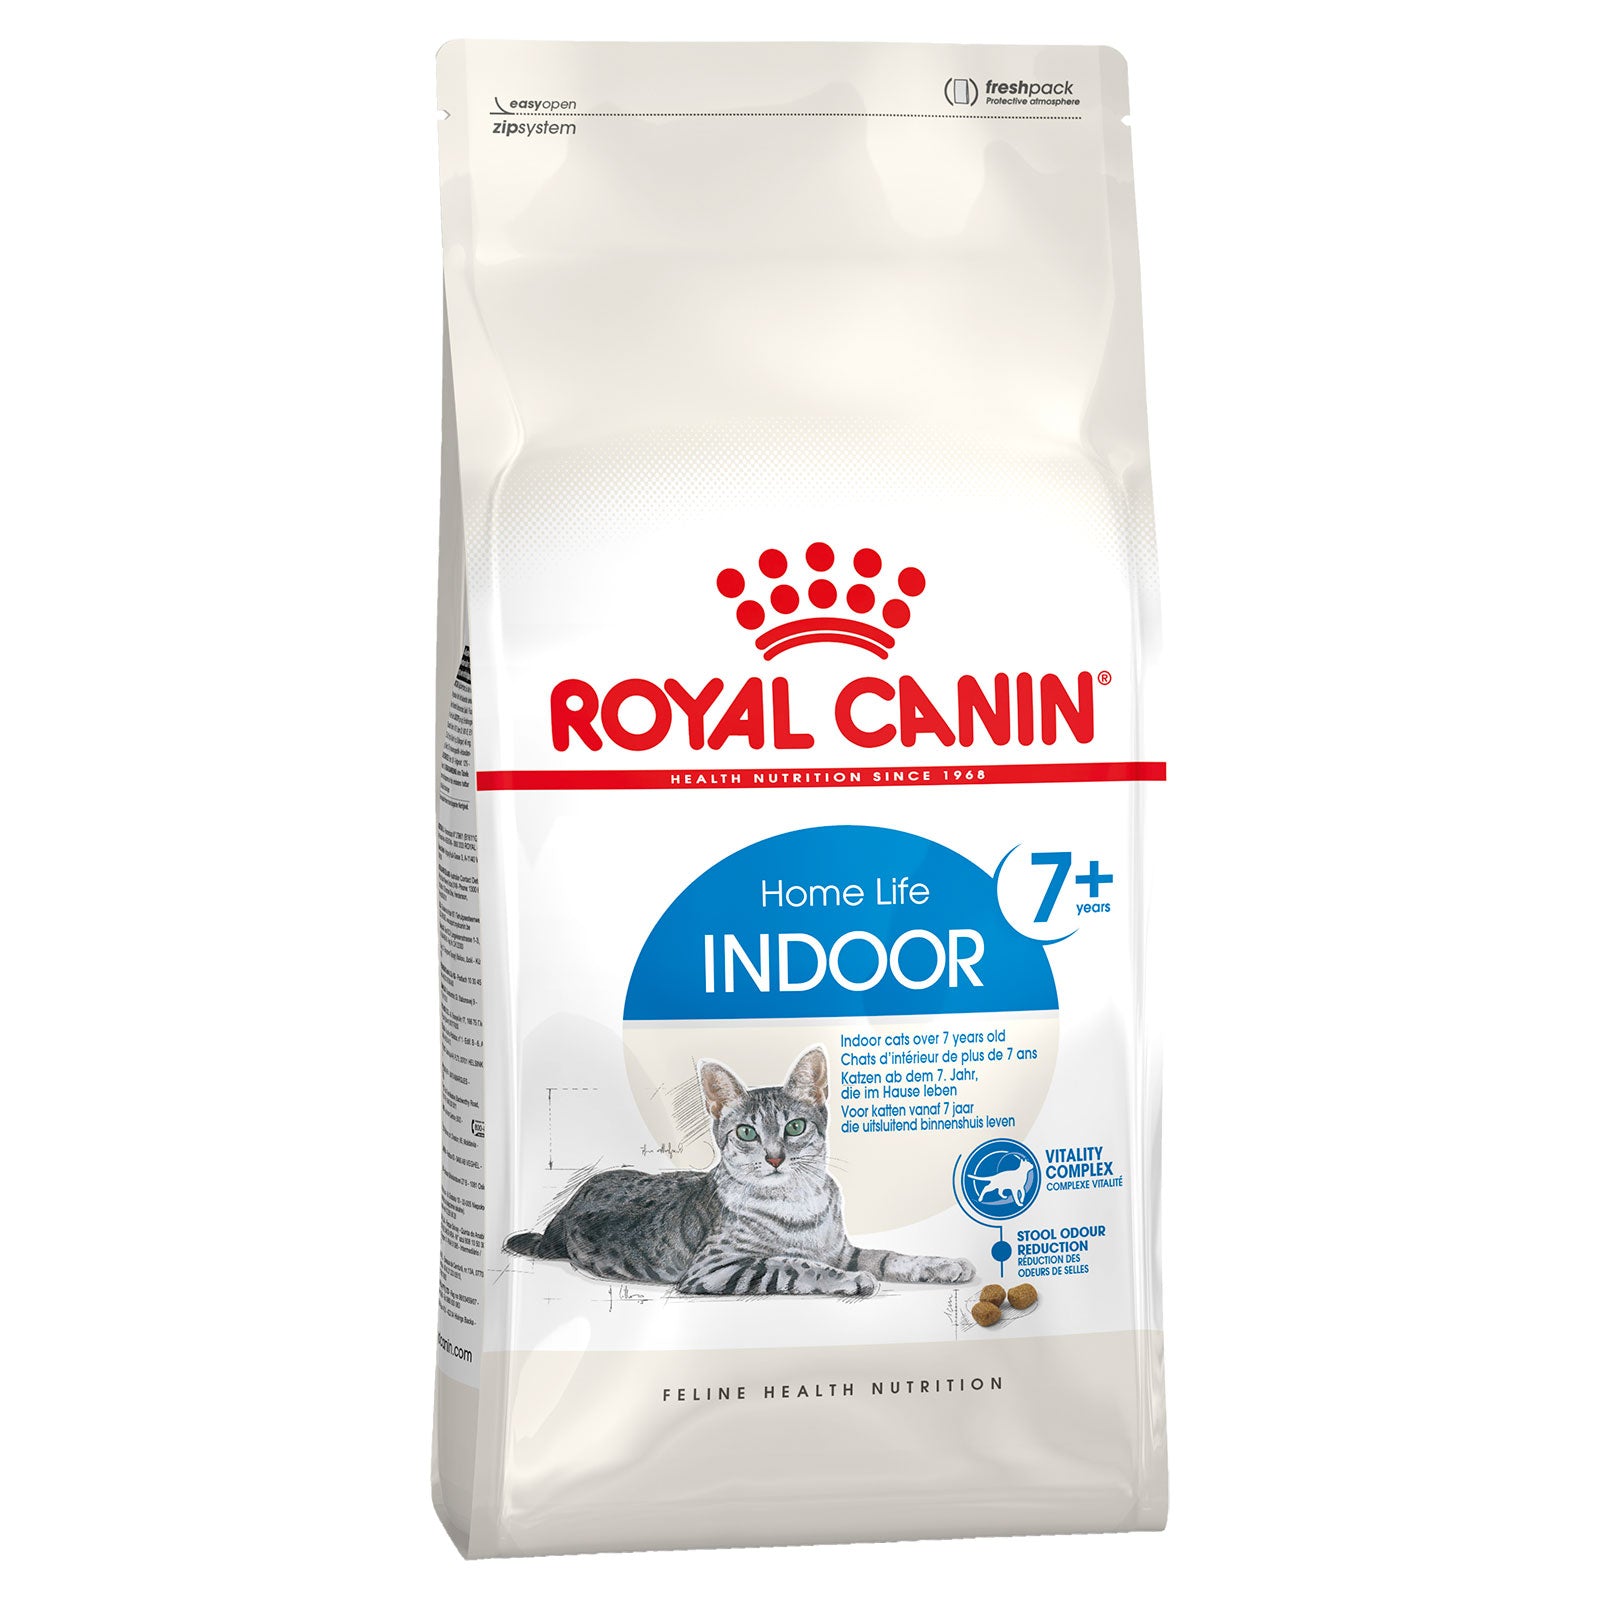 Royal Canin Cat Food Adult 7+ Indoor